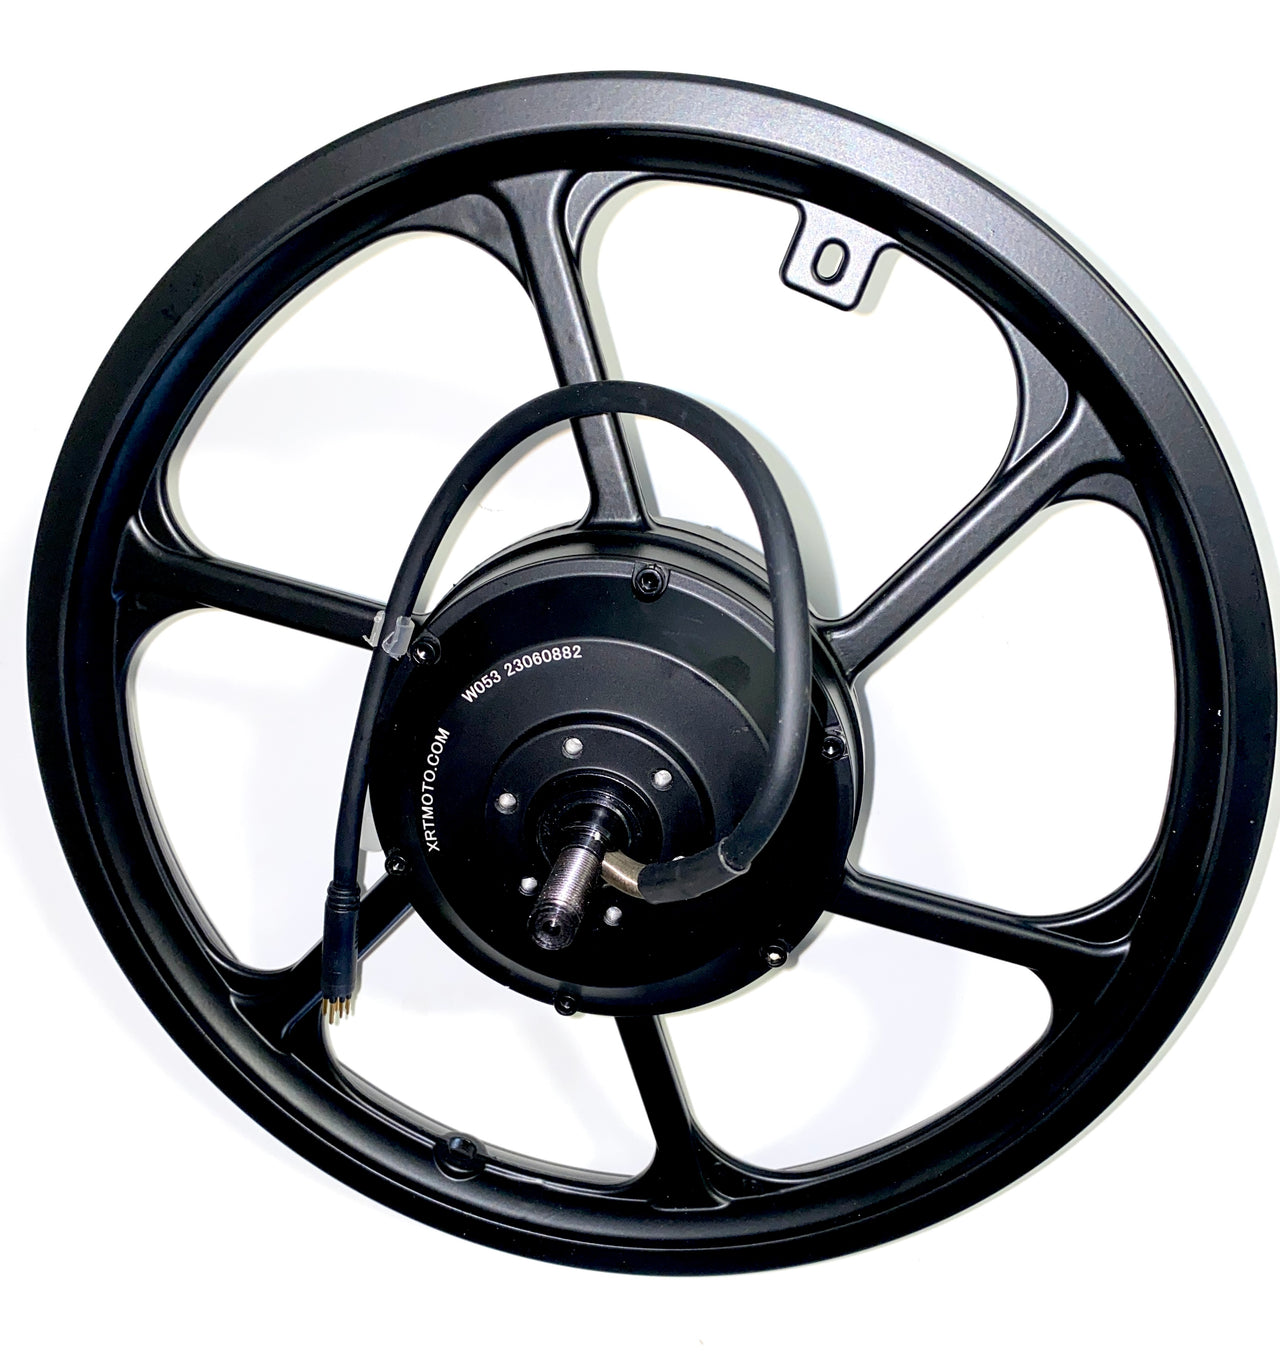 16" Rear Wheel and 48v/350W High Torque Hub Motor Assembly (Gear Drive) | P16-205